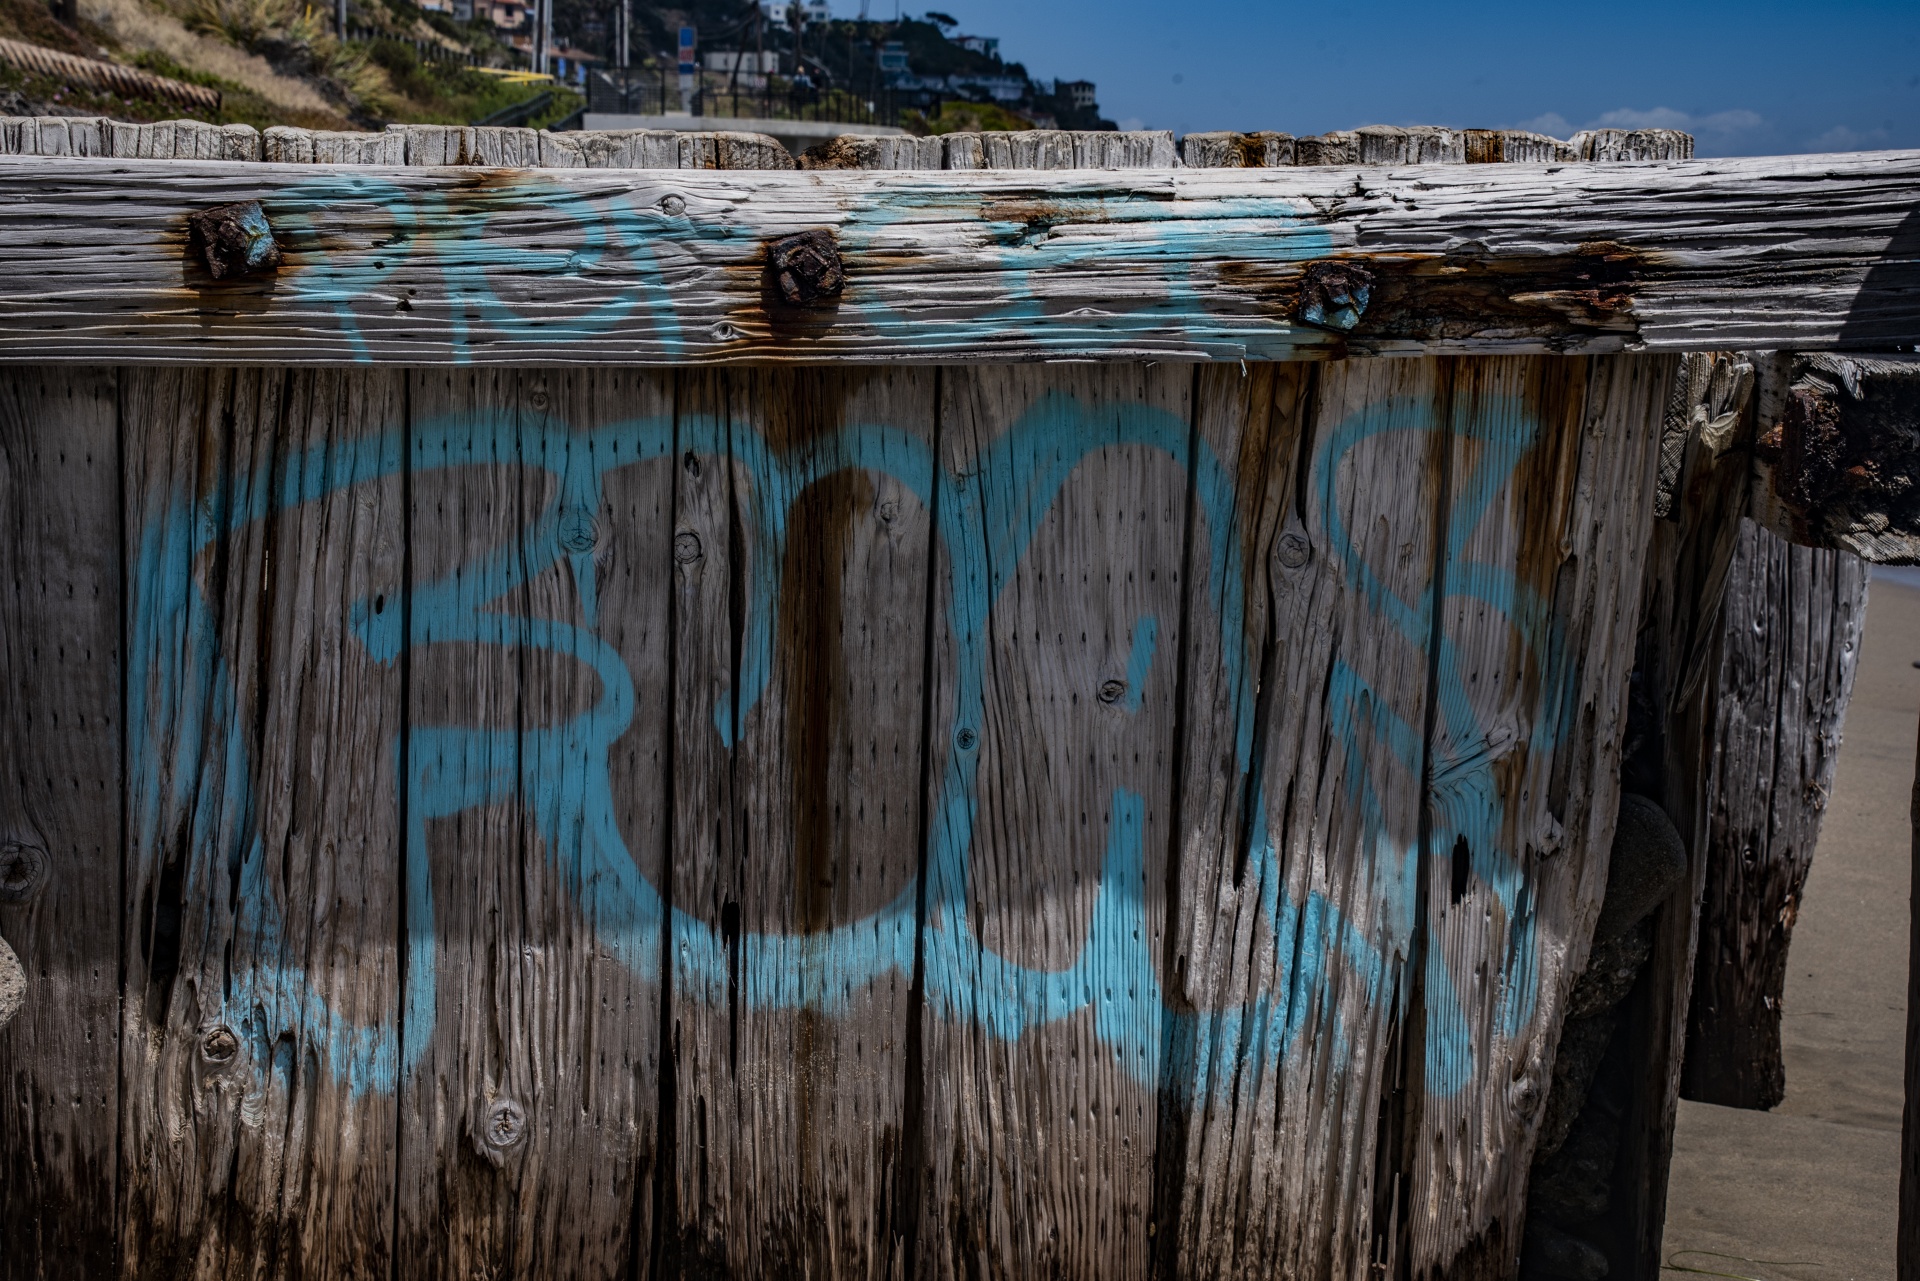 Blue graffiti writing on a weathered wood wall at the Southern California beach